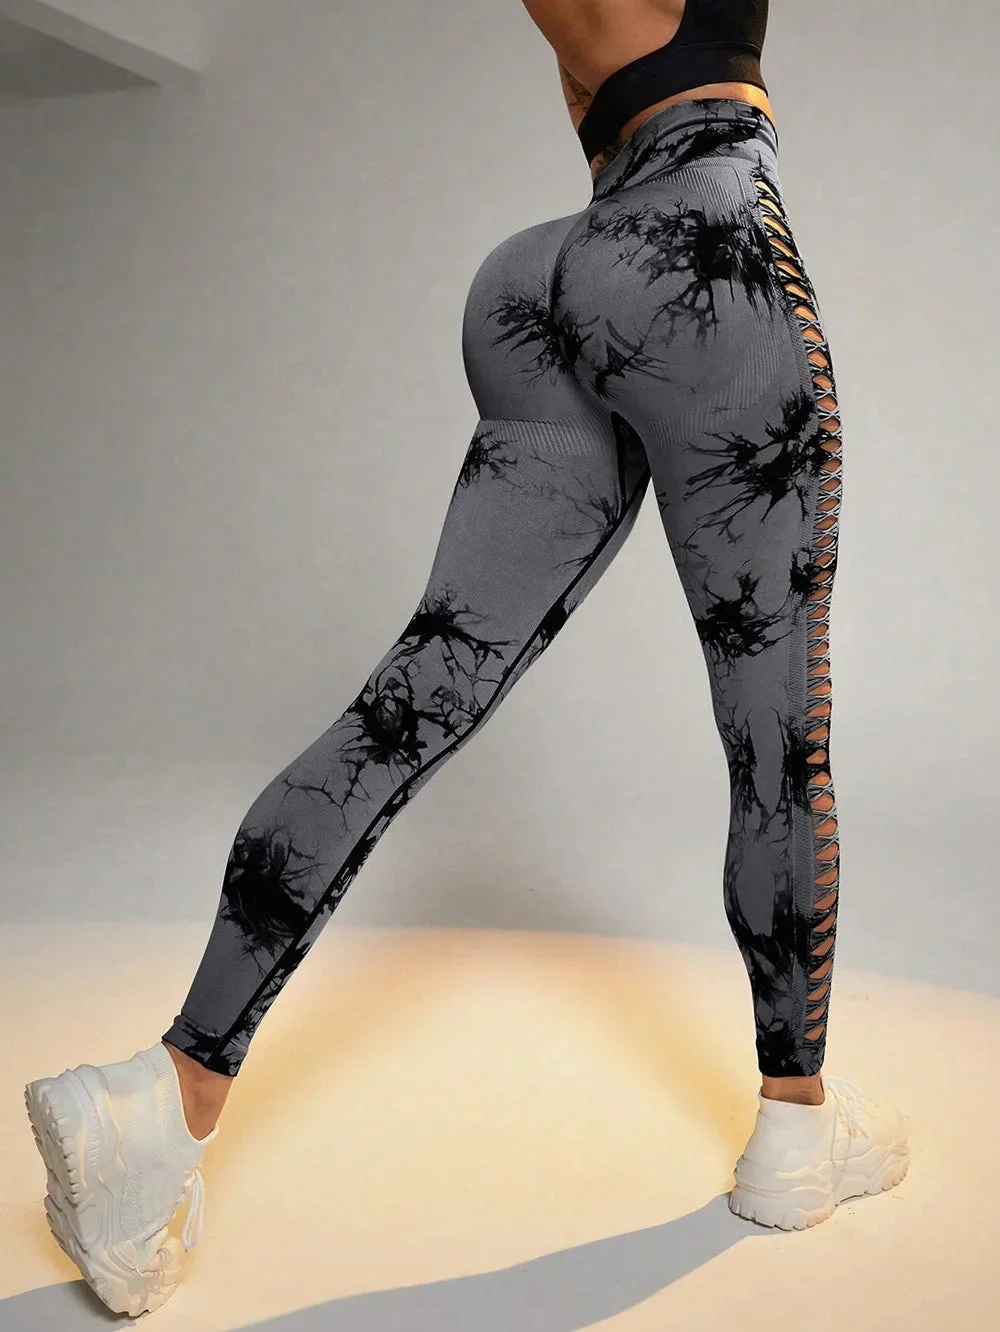 Tlbang Hollow Black Seamless Leggings Women Fitness Leggings Gym Yoga Pants High Waist Yoga Pants Sports Female Clothing